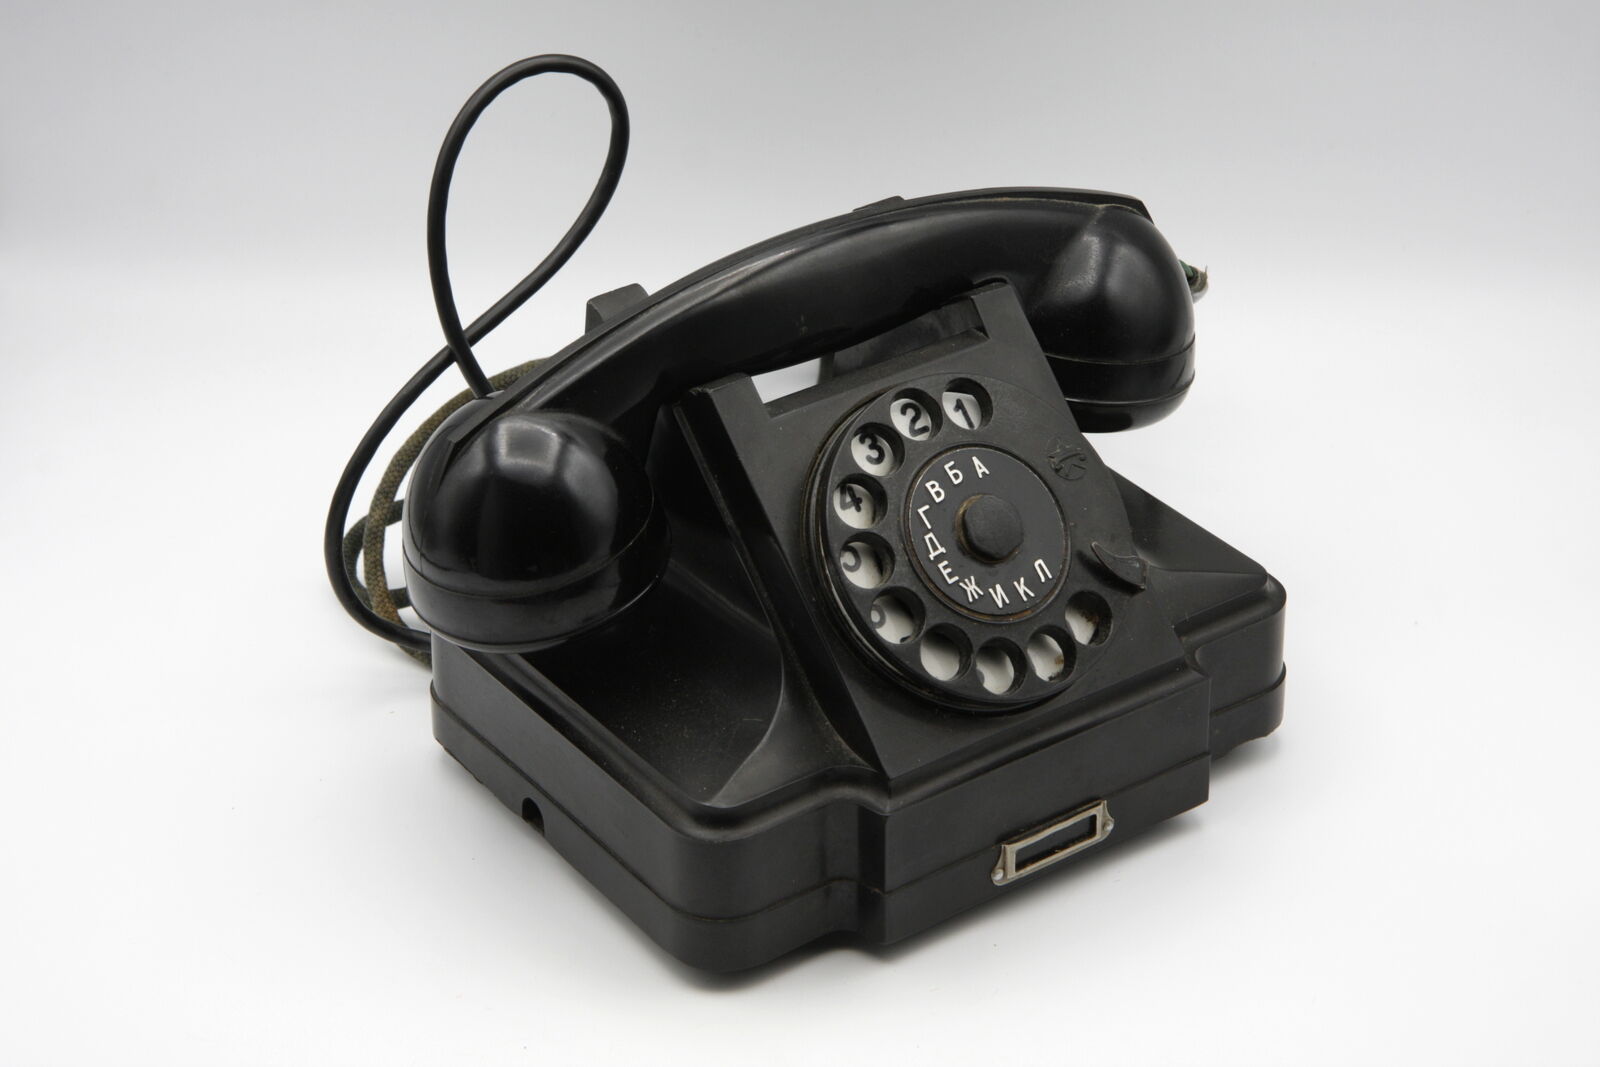 Phone Black Bakelite Rotary Dialing Vintage Desk Telephone Krasnaya Zarya USSR